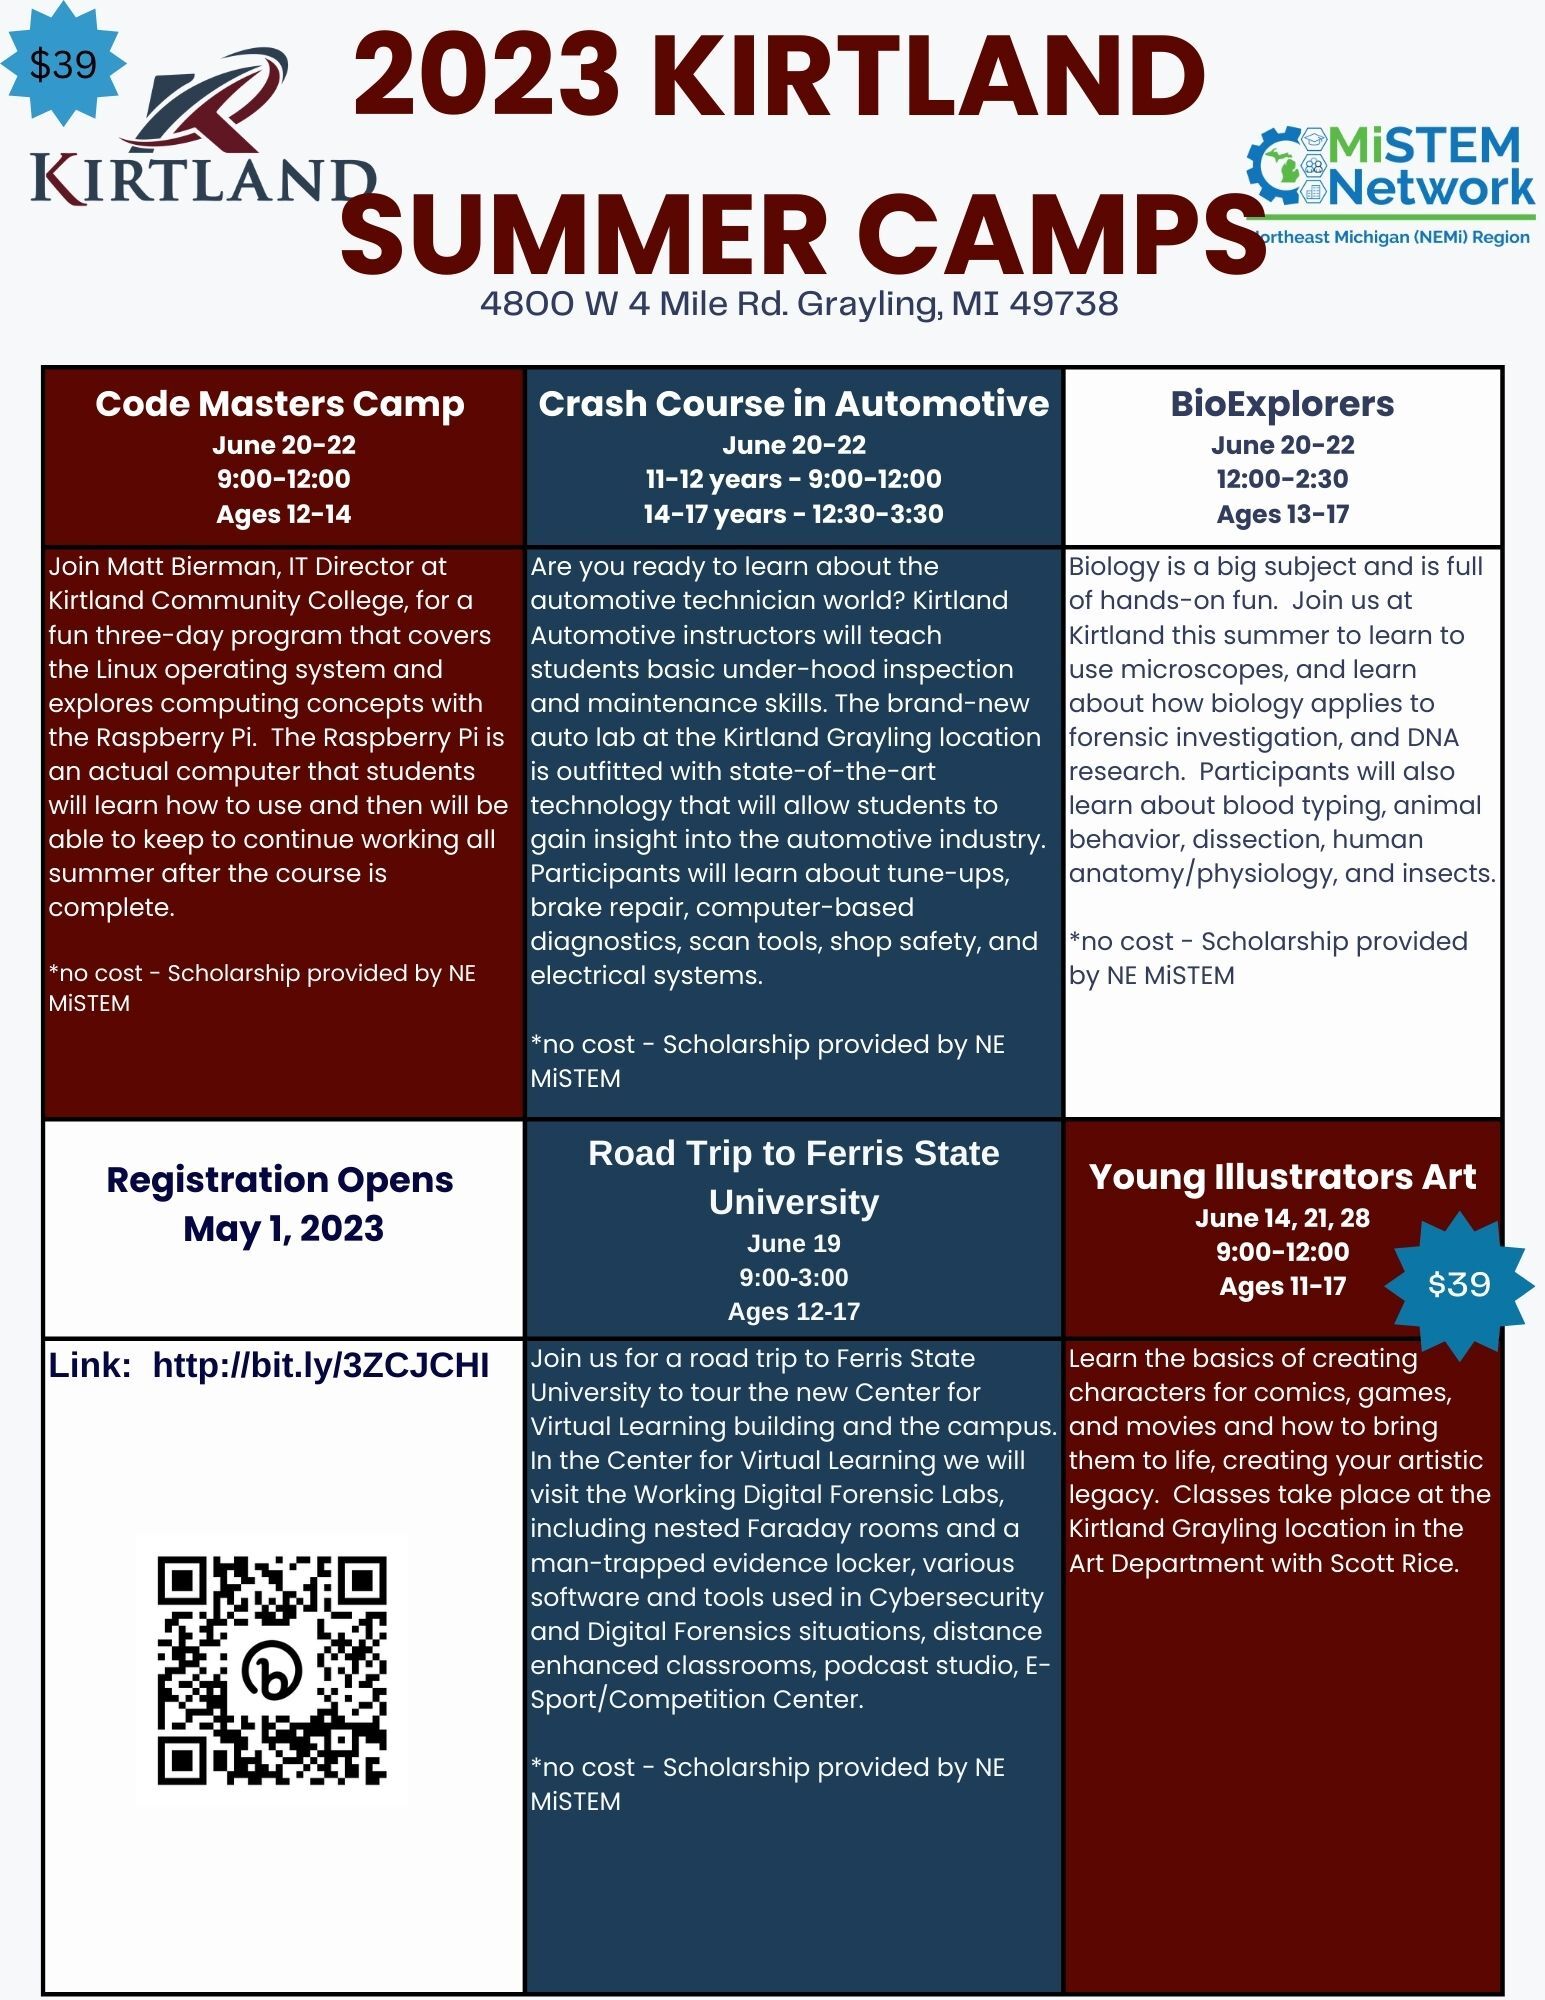 Kirtland Summer Camp Information